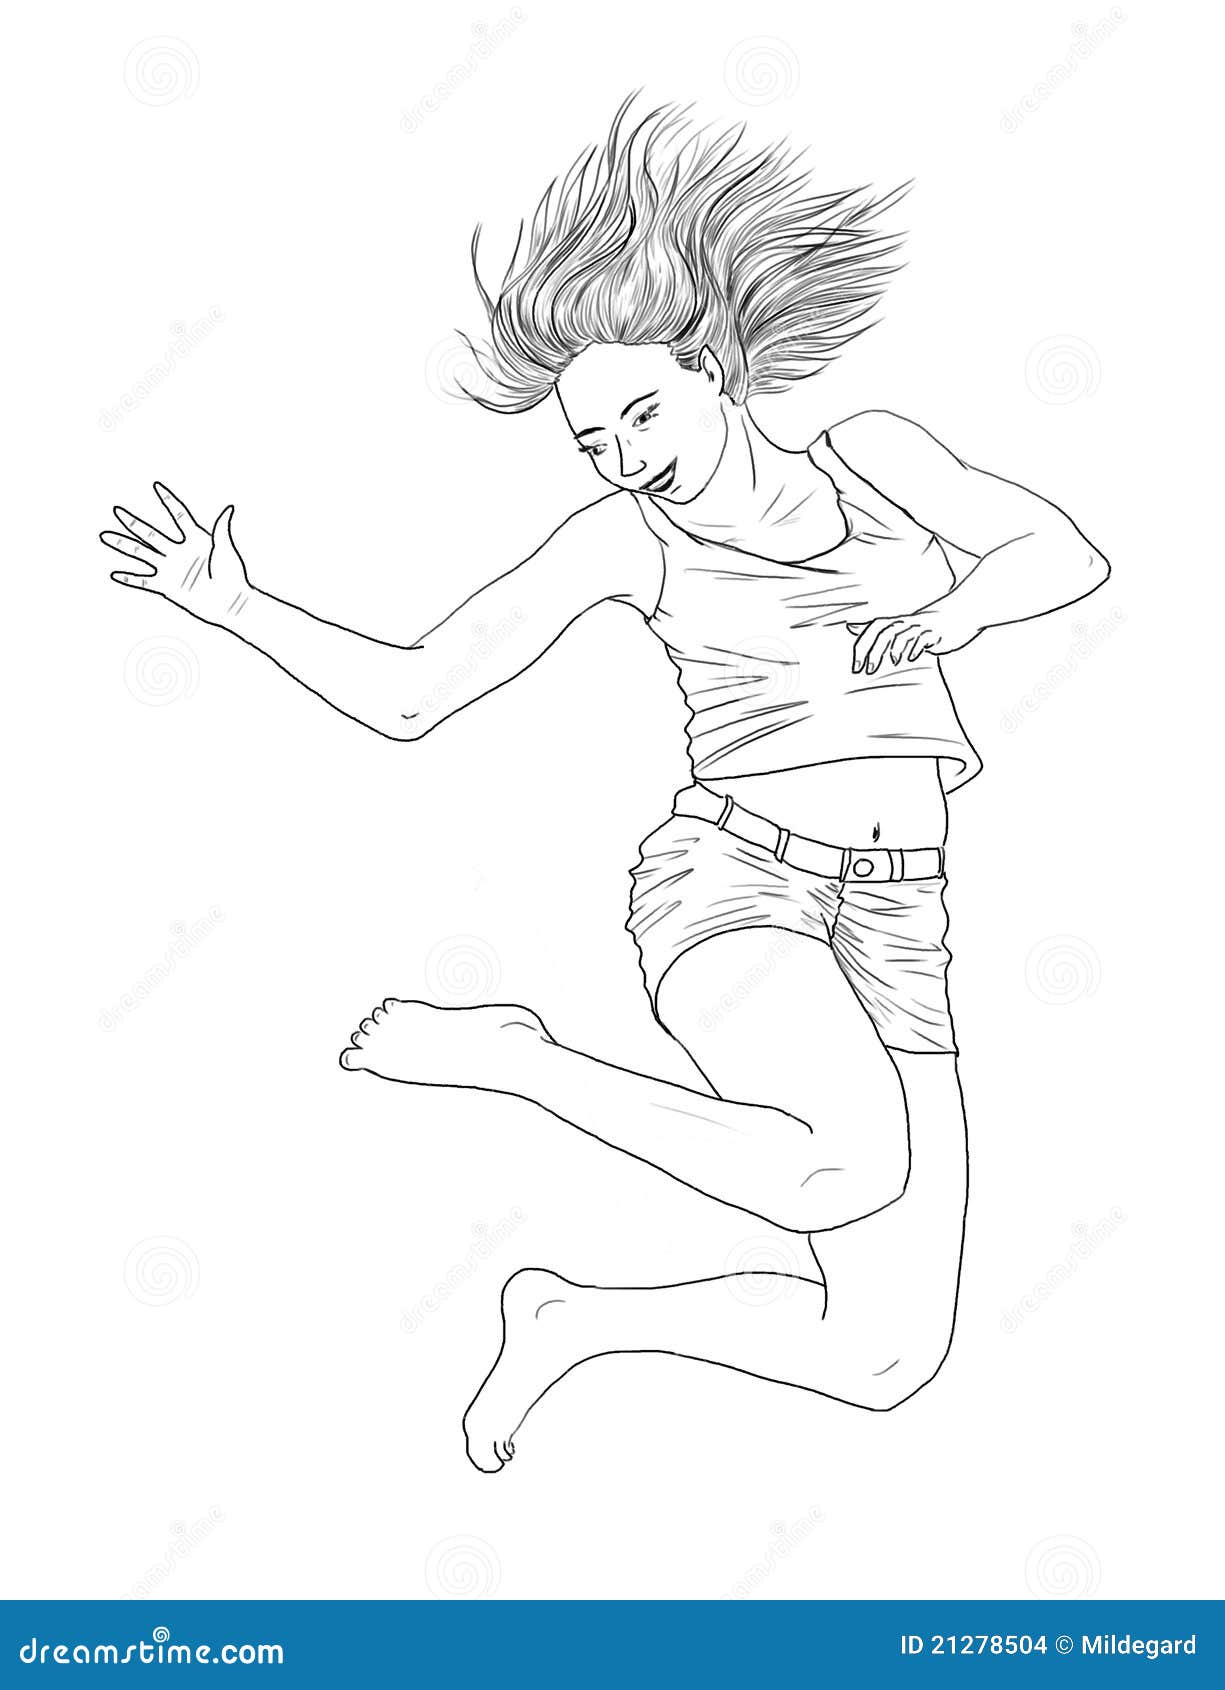 Happy jumping girl stock illustration. Illustration of drawings - 21278504